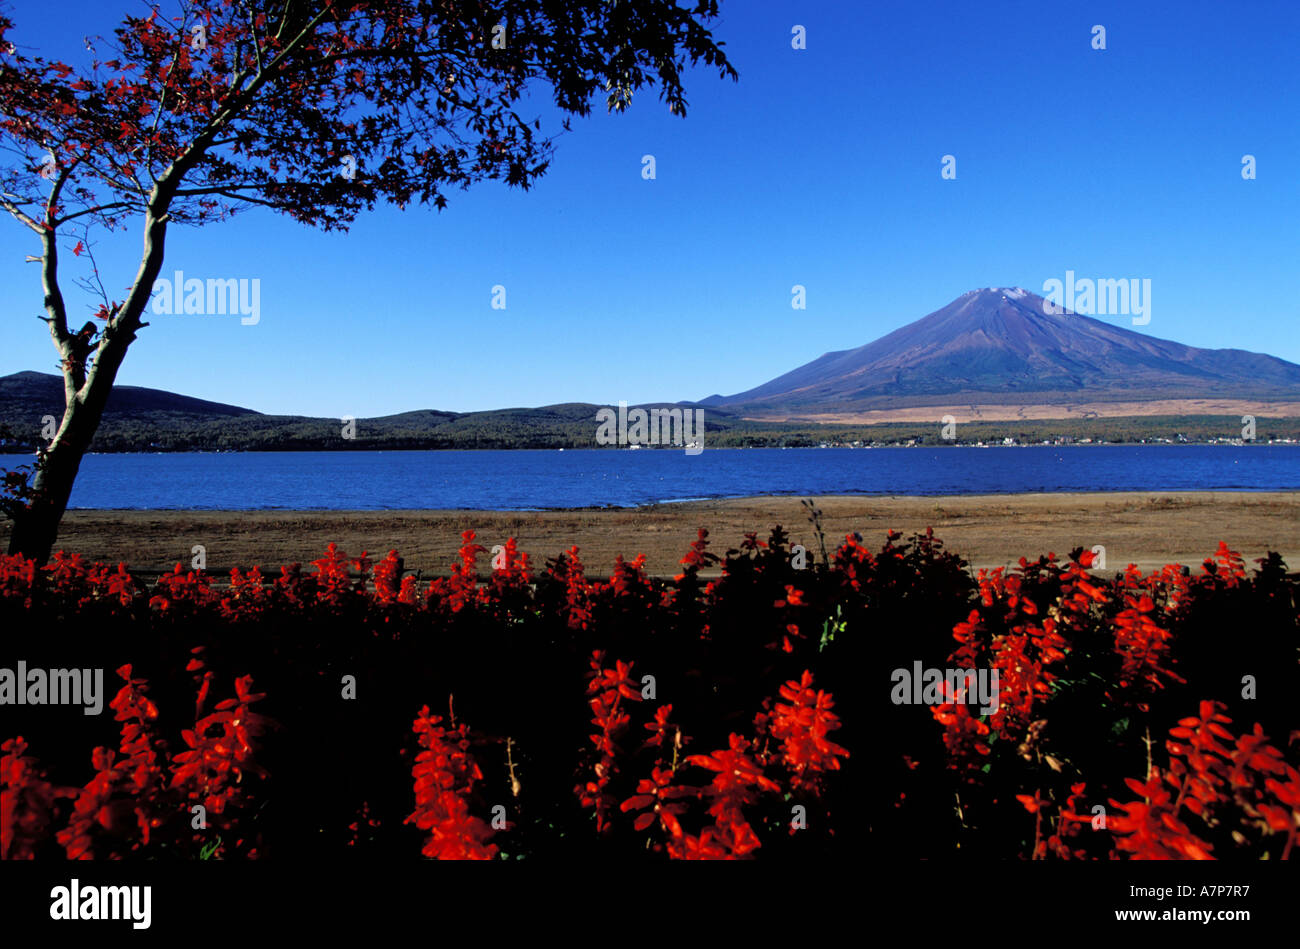 Japan, Honshu Island, Chubu region, Mount Fuji (12, 389 ft) in front of Lake Yamanakako Stock Photo